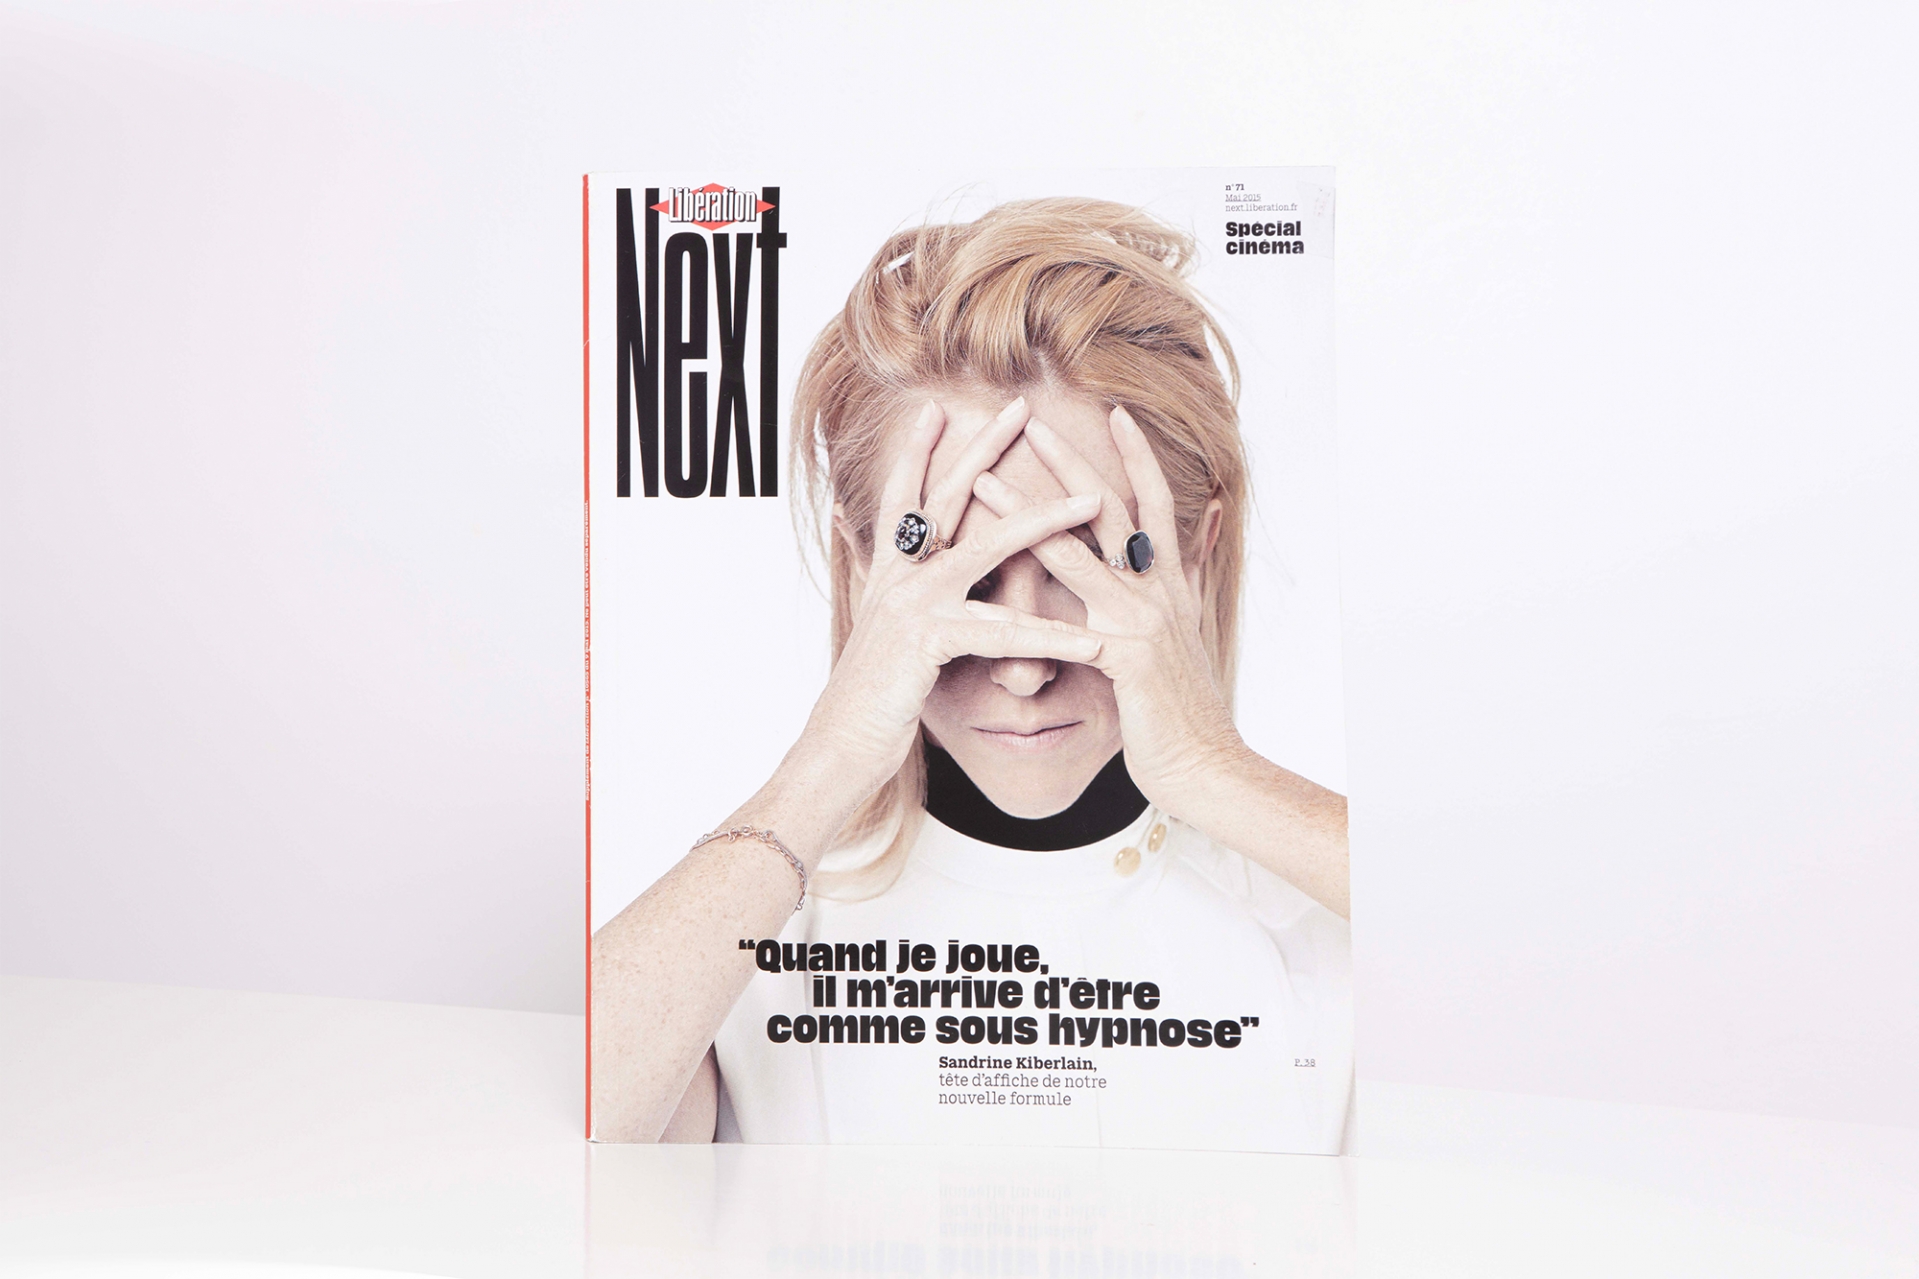 Next magazine redesign